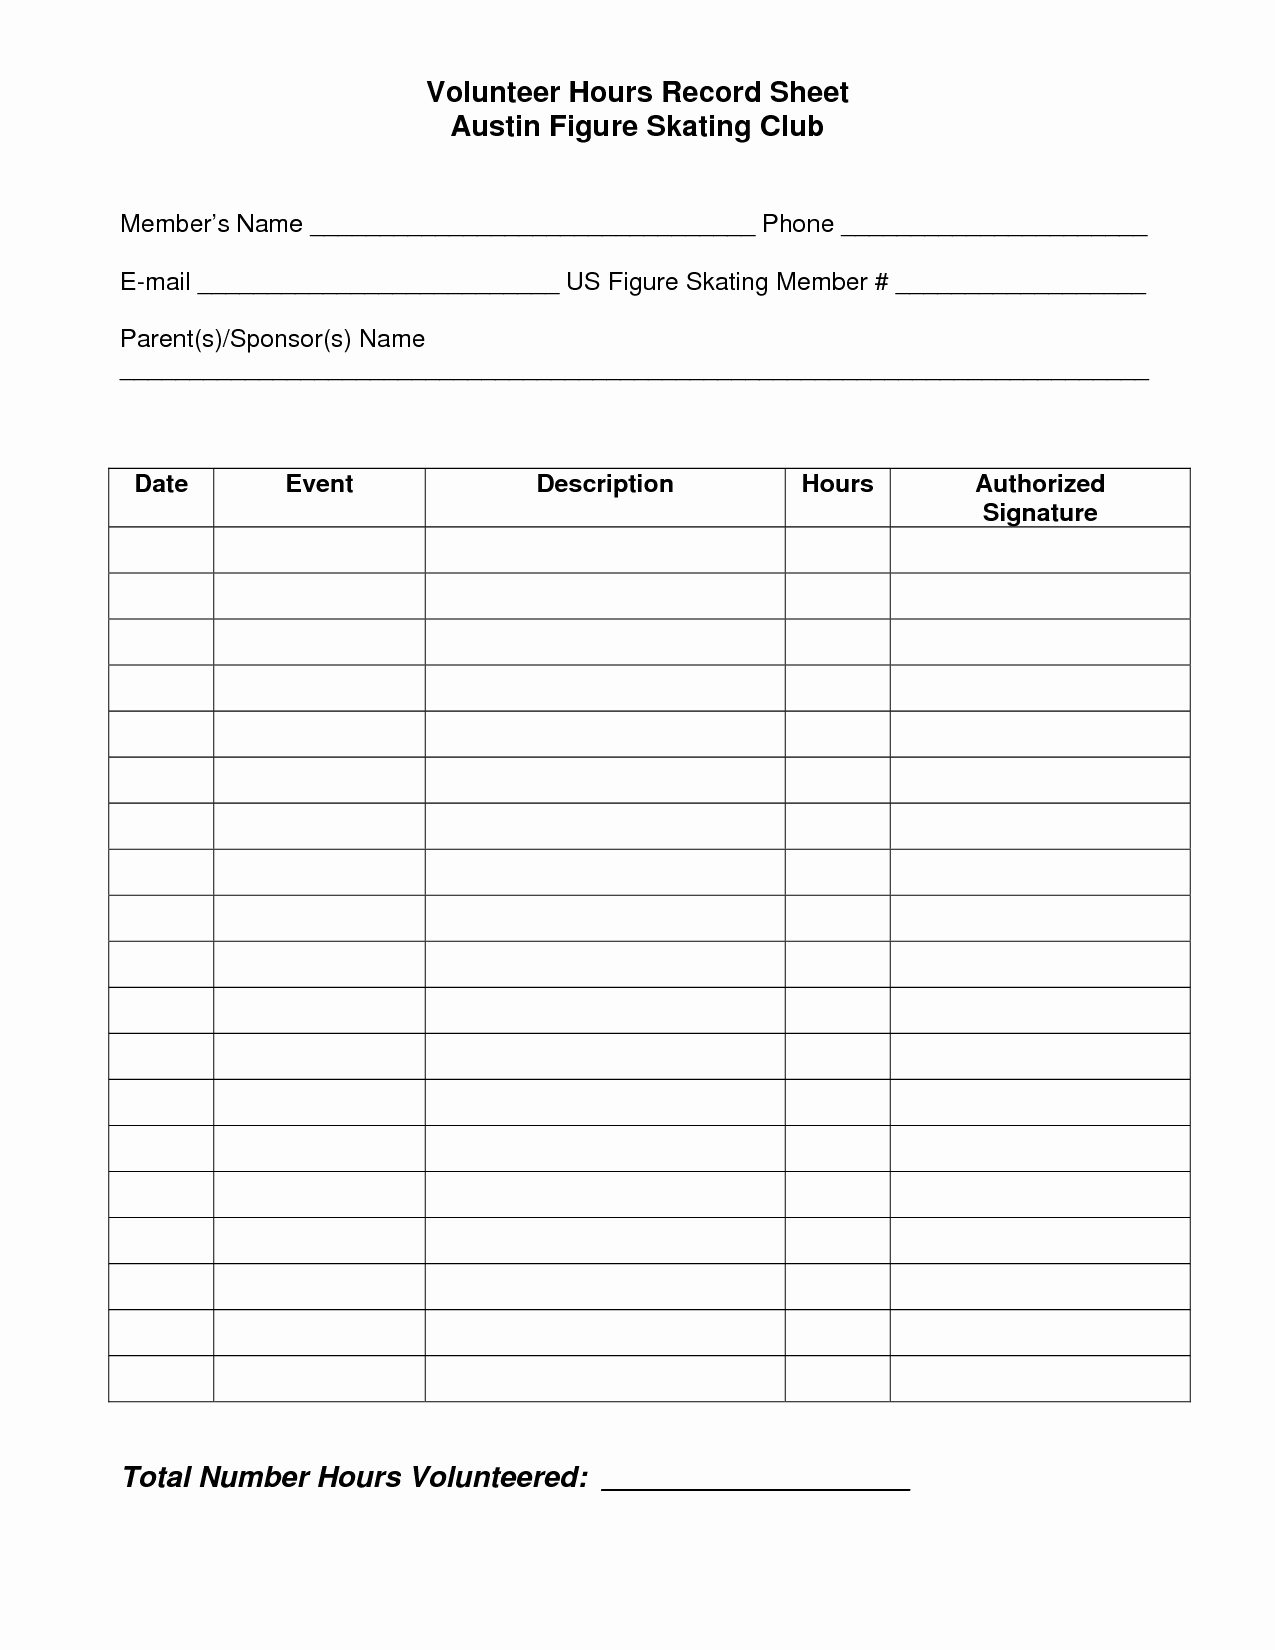 Volunteer Interest form Template New Volunteer Hours Log Sheet Template Beta Club